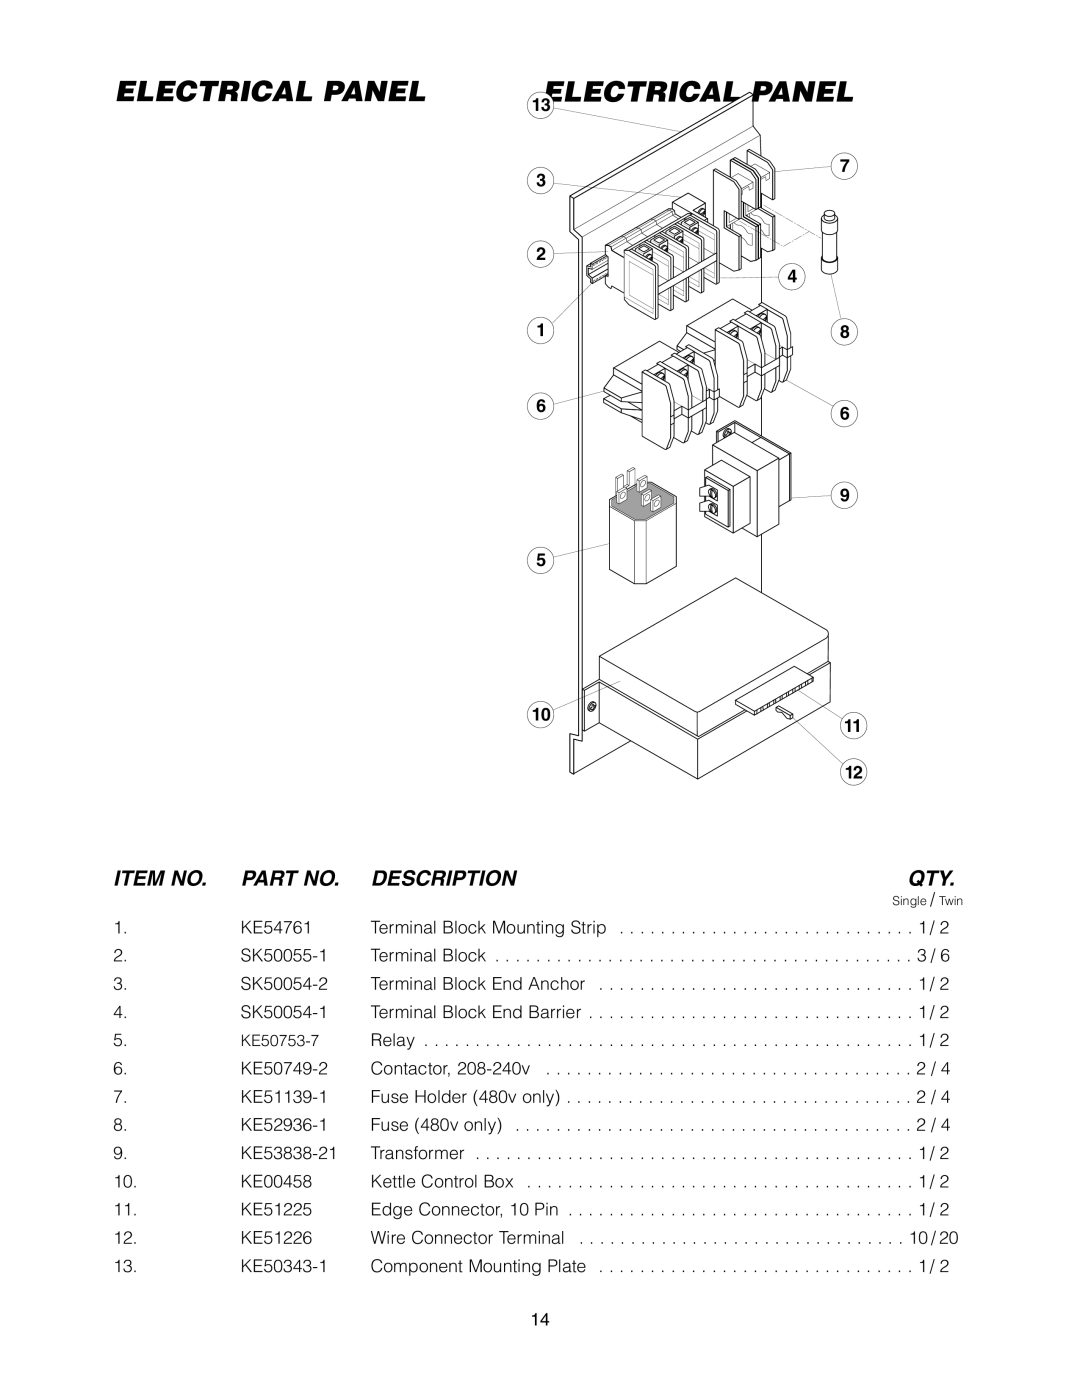 Cleveland Range KET-3-T manual Electrical Panel, Item No, Description 